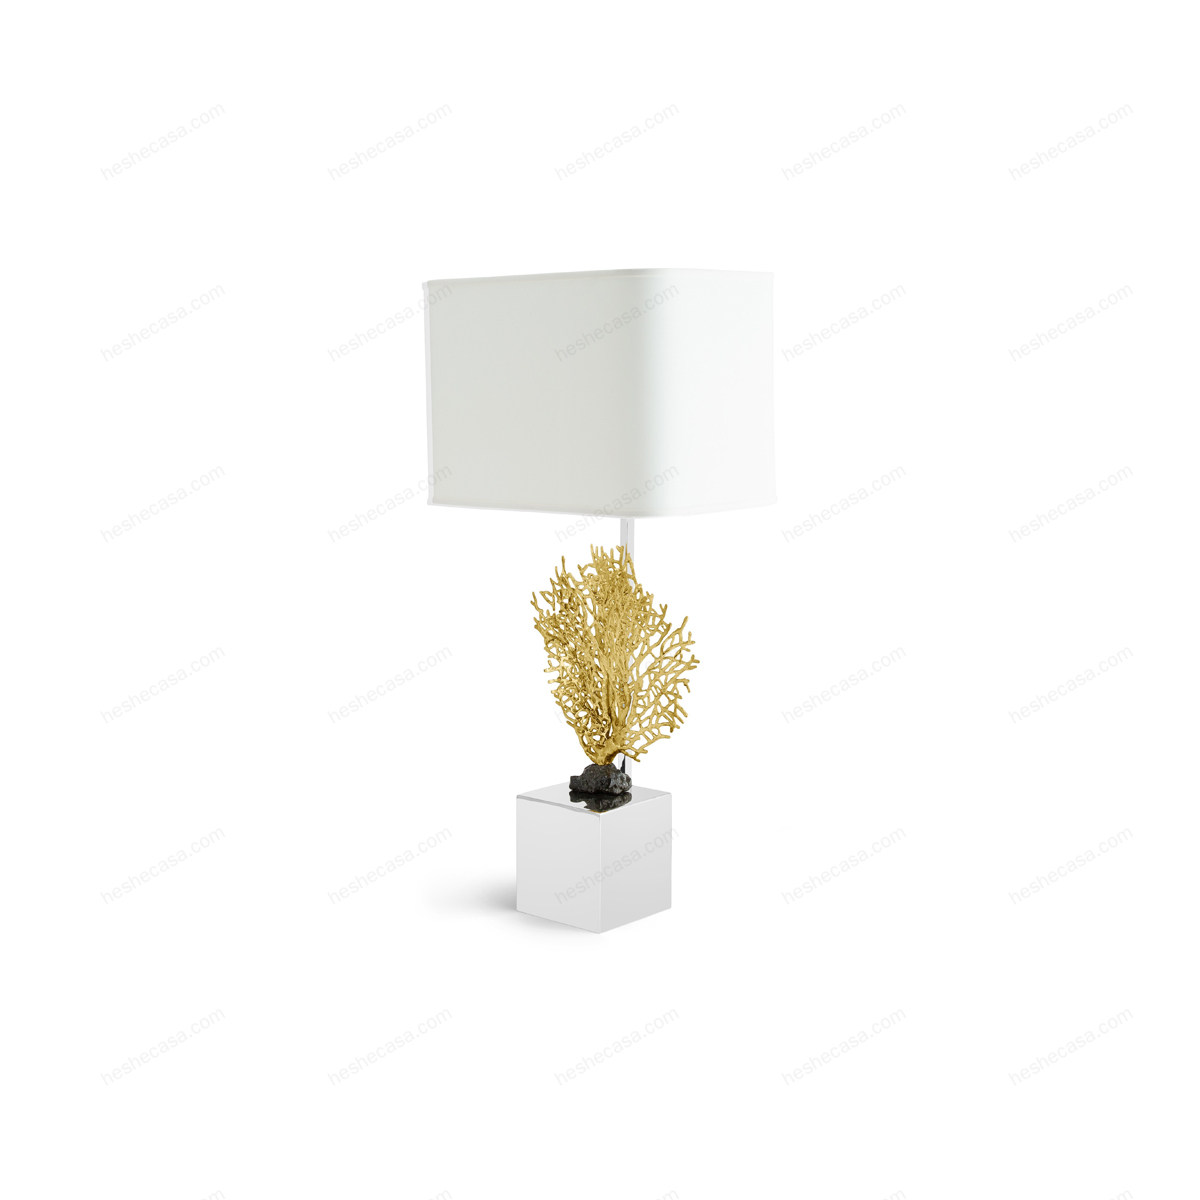 Fan Coral Table Lamp台灯